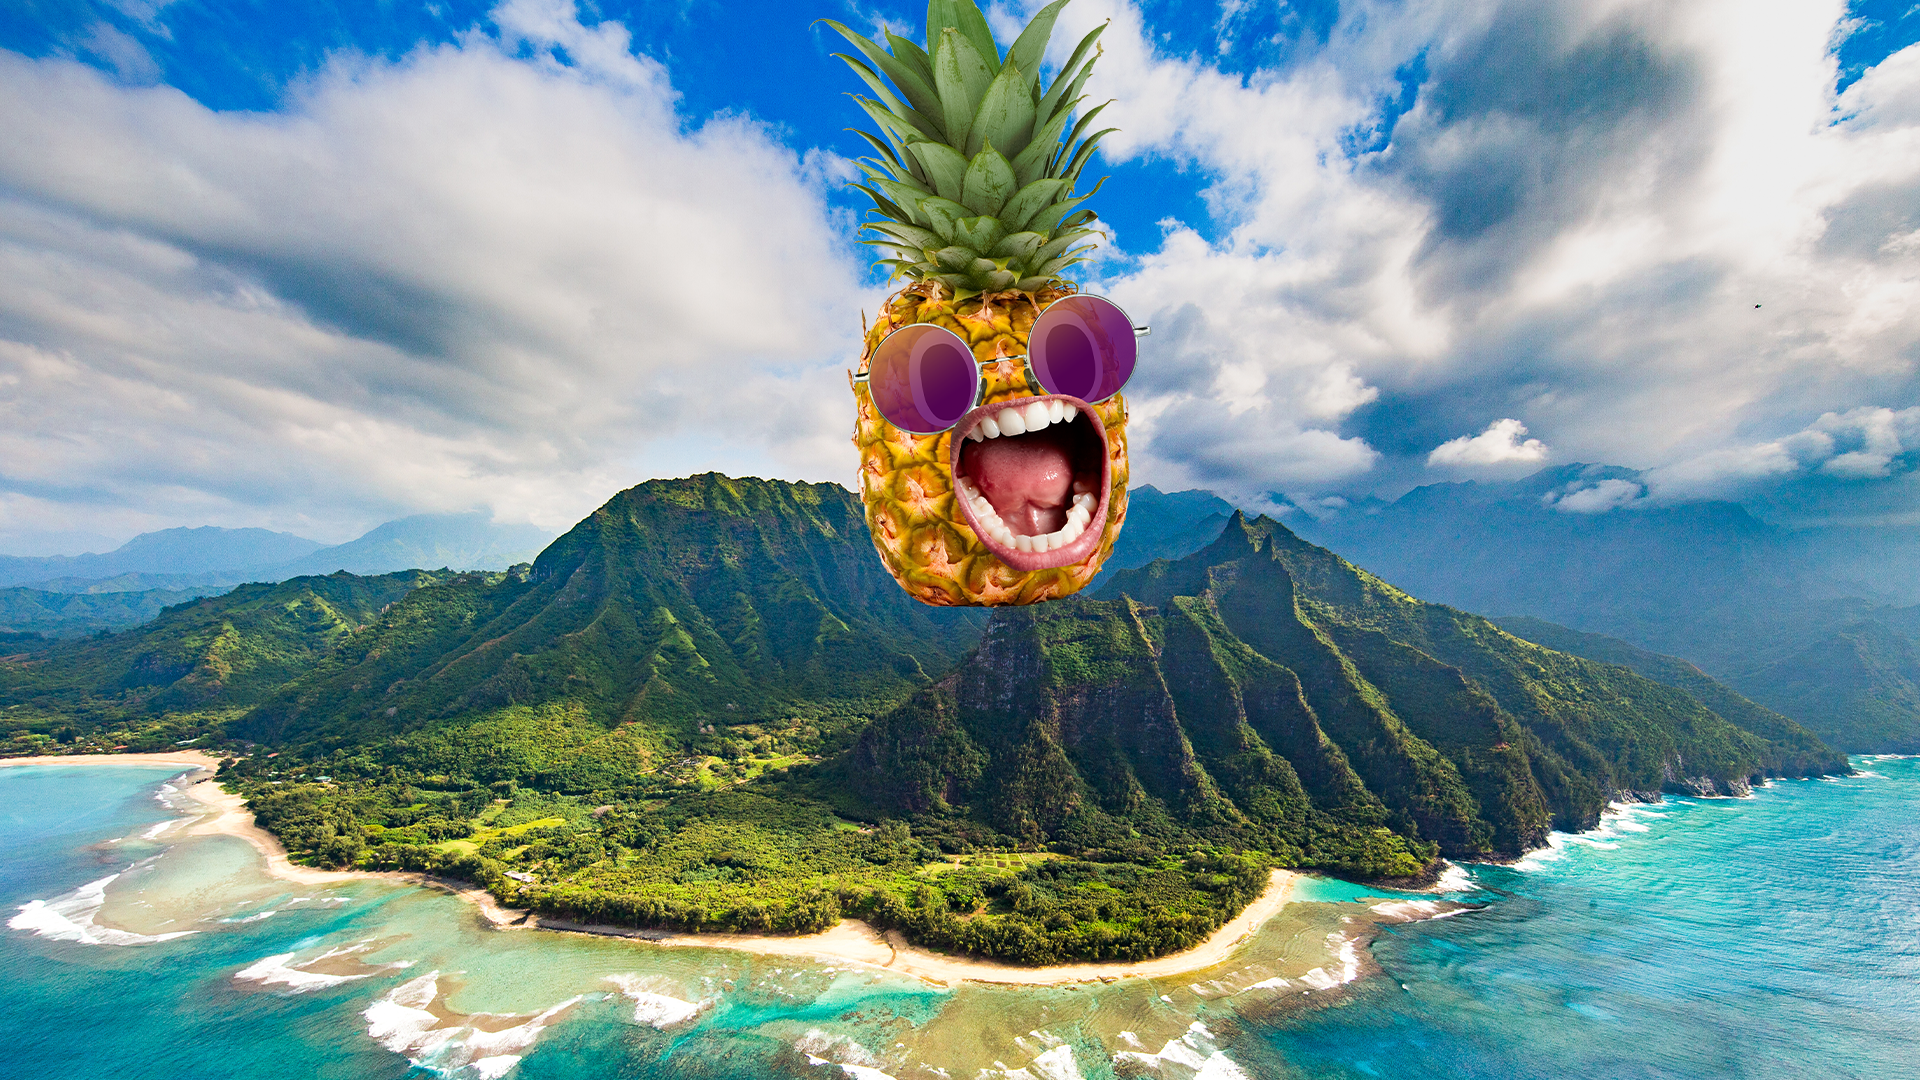 Screaming Beano pineapple on top of a Hawaiian mountain